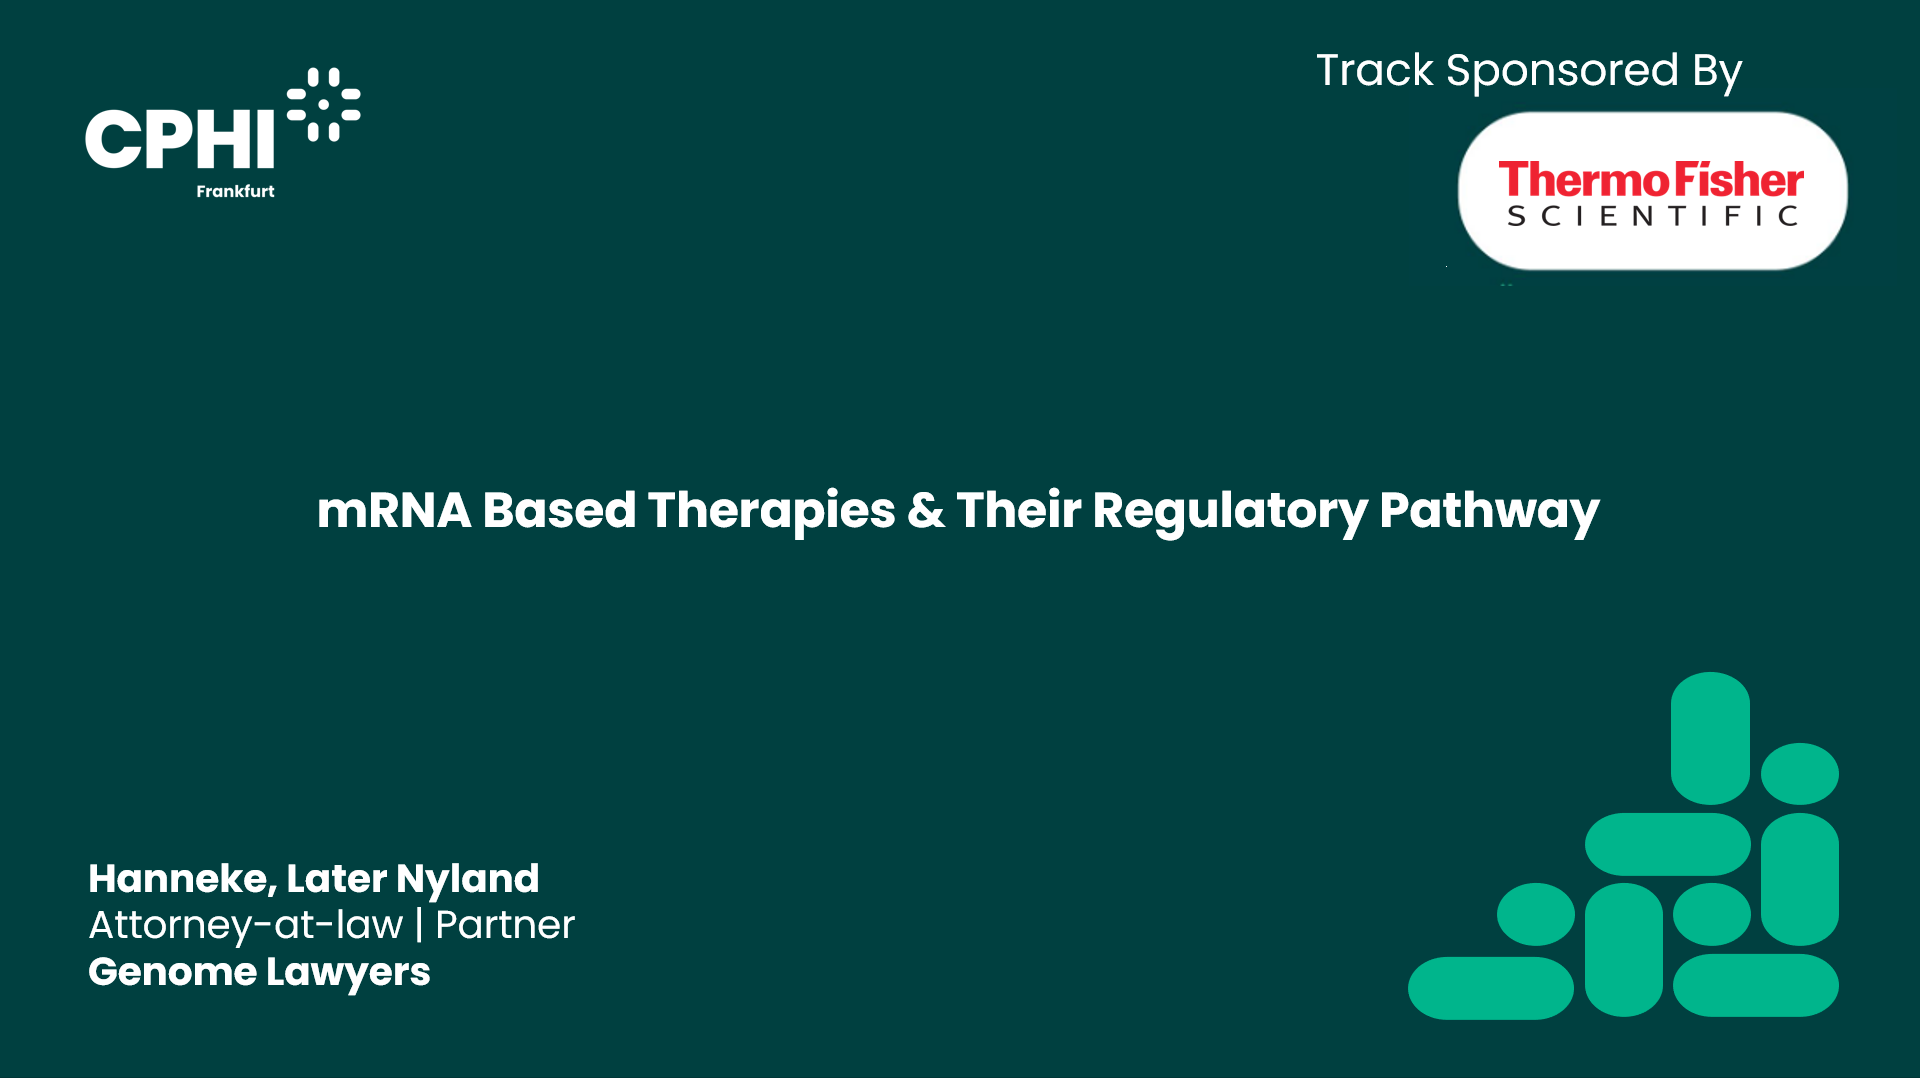 mRNA based therapies & their regulatory pathway